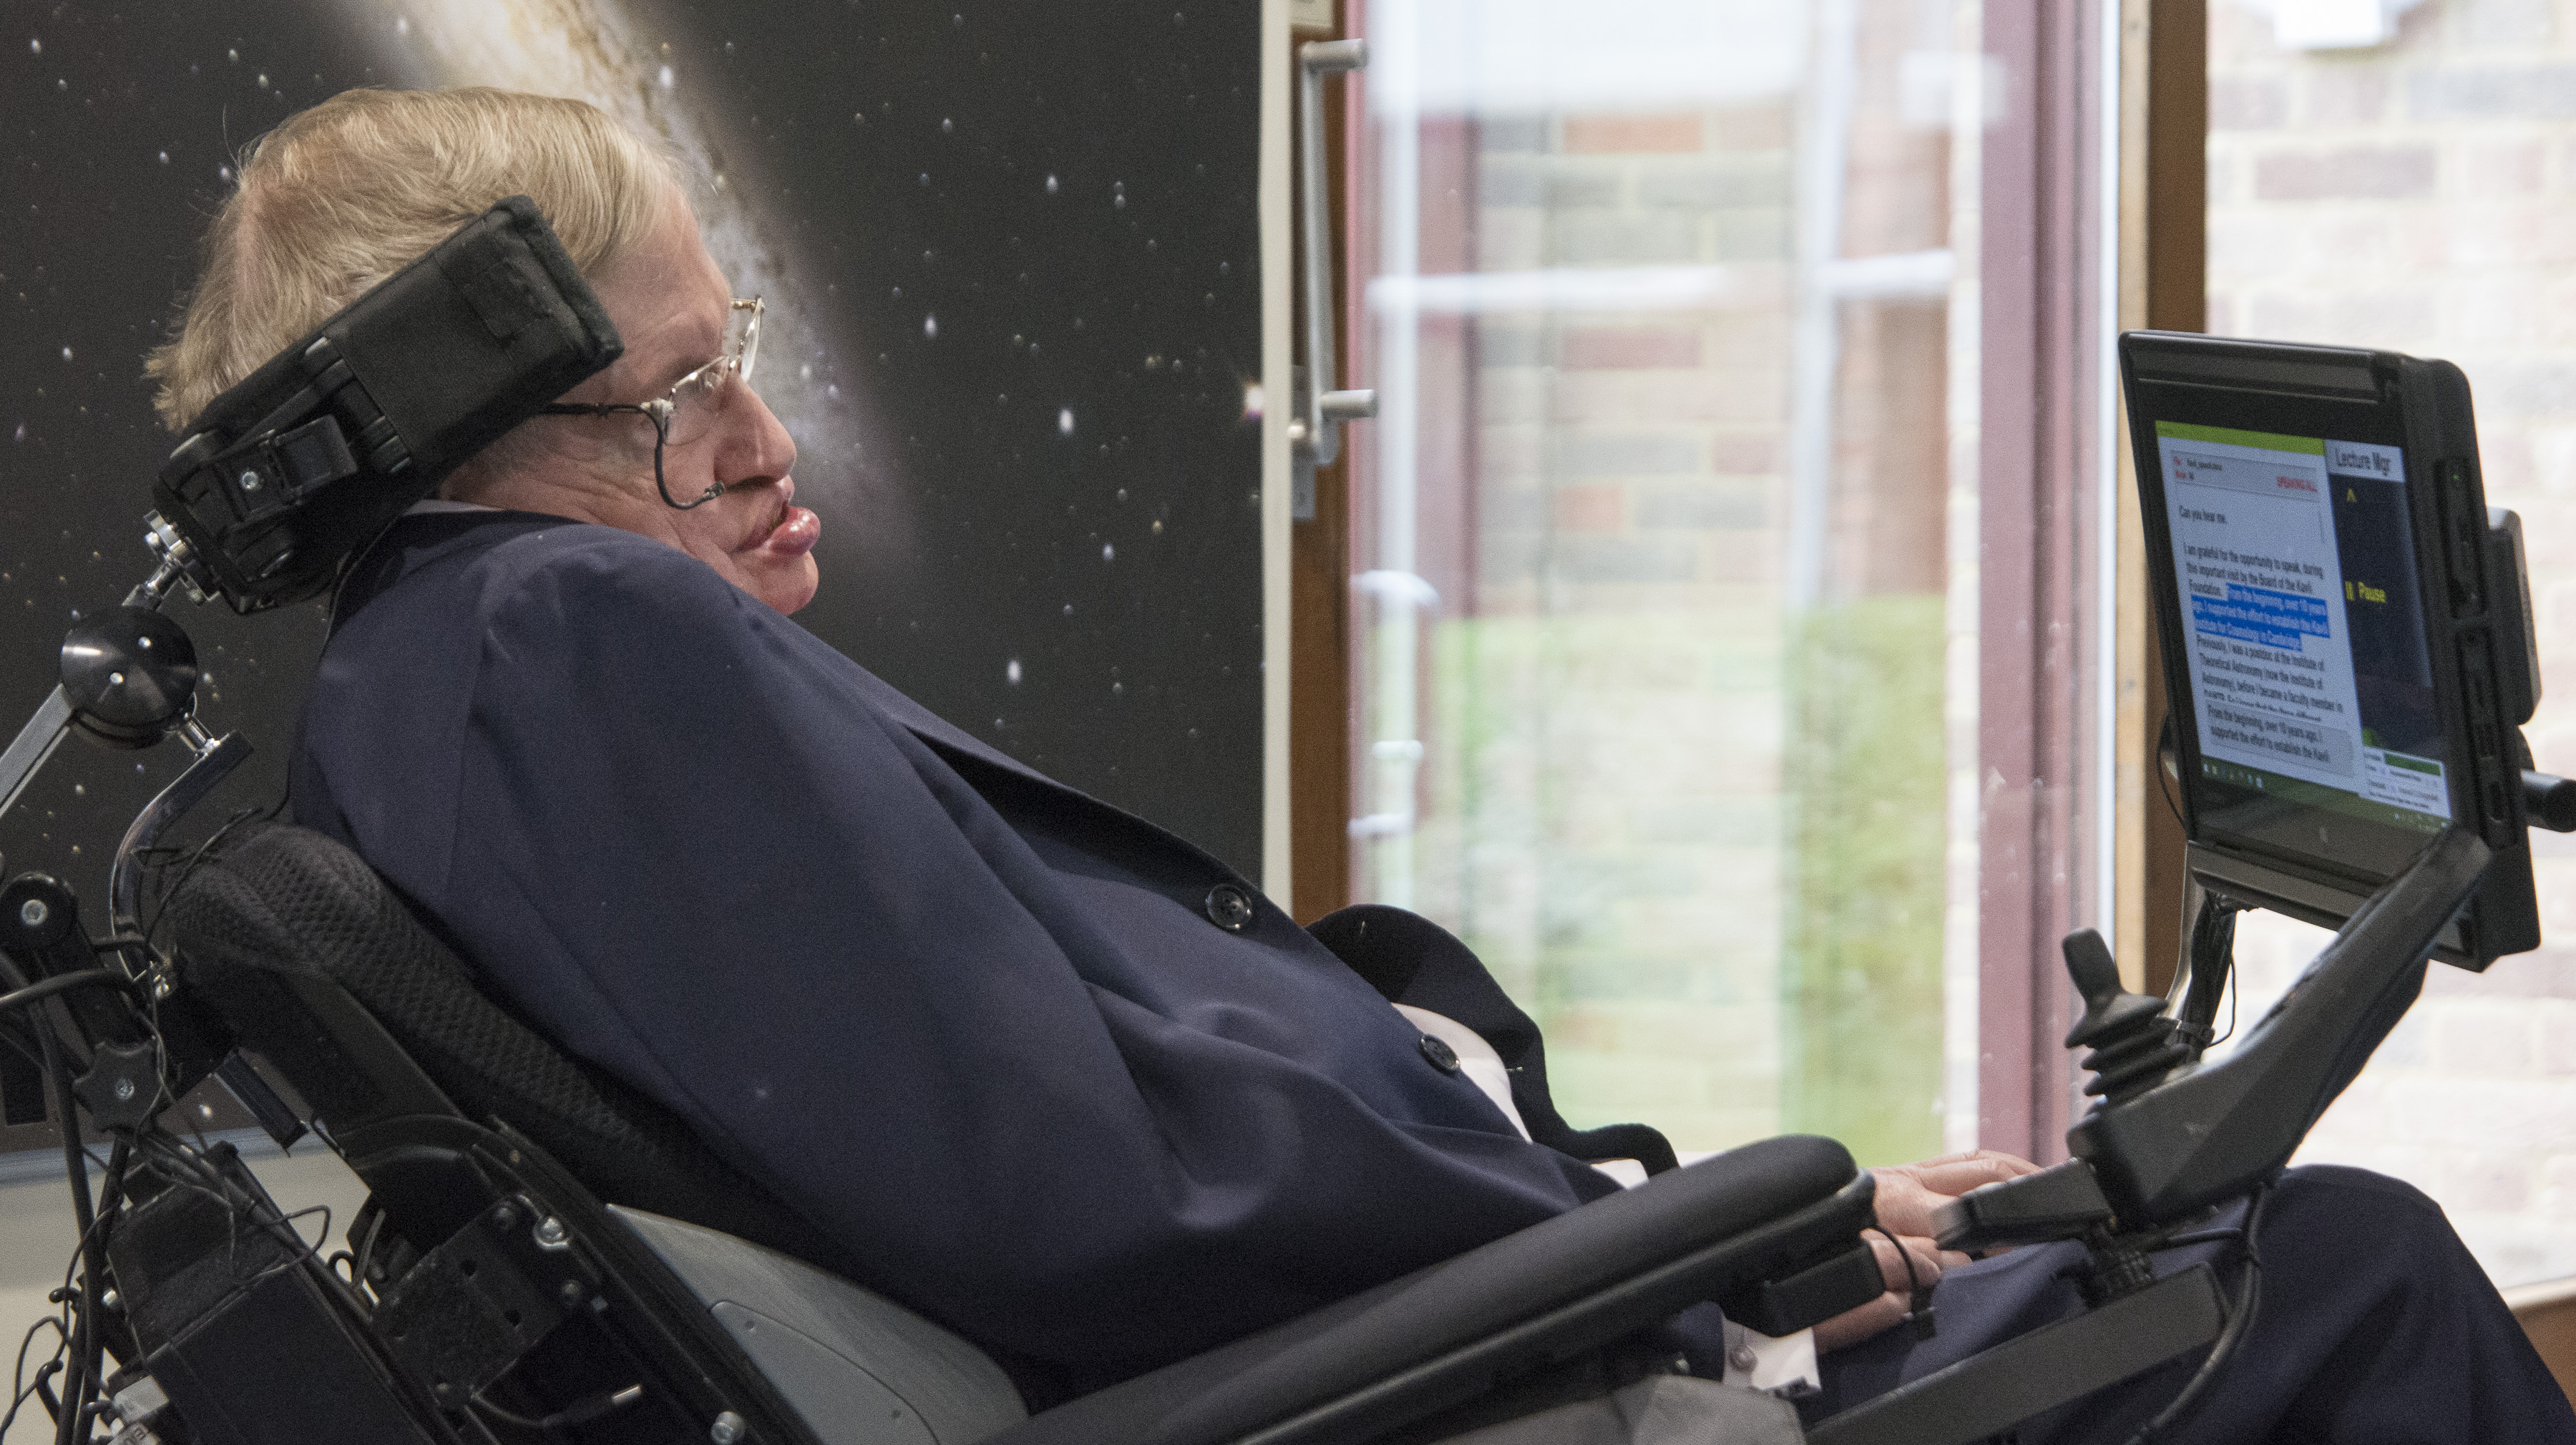 Stephen Hawking giving his speech